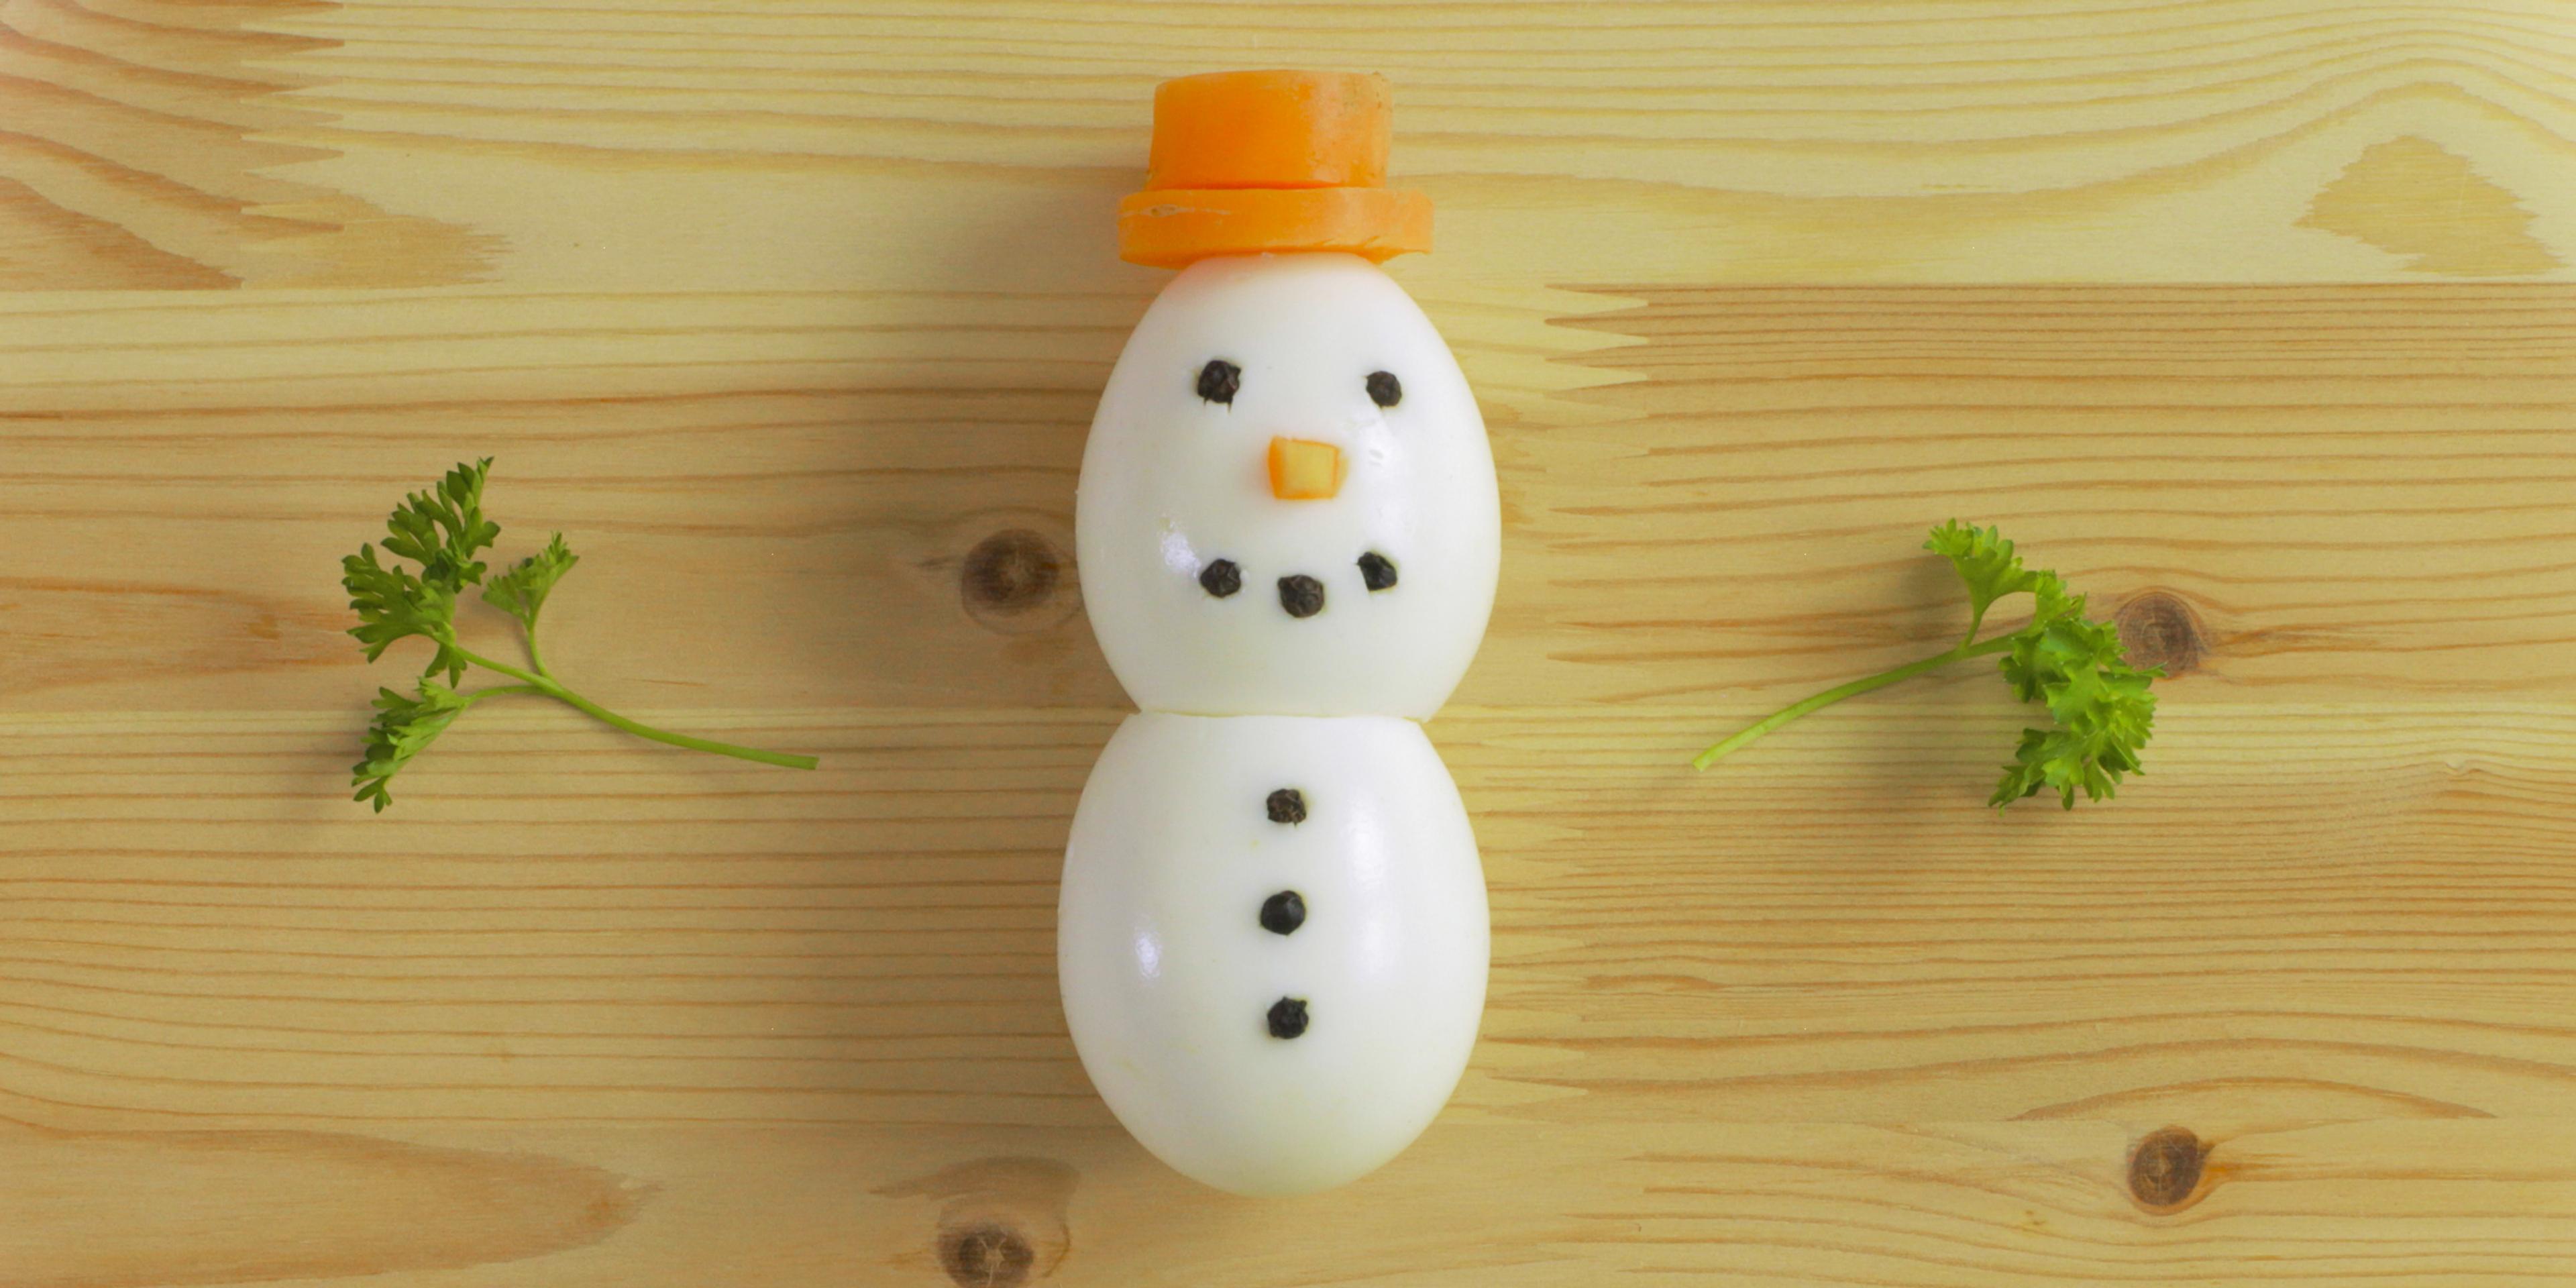 The egg snowman near completion.